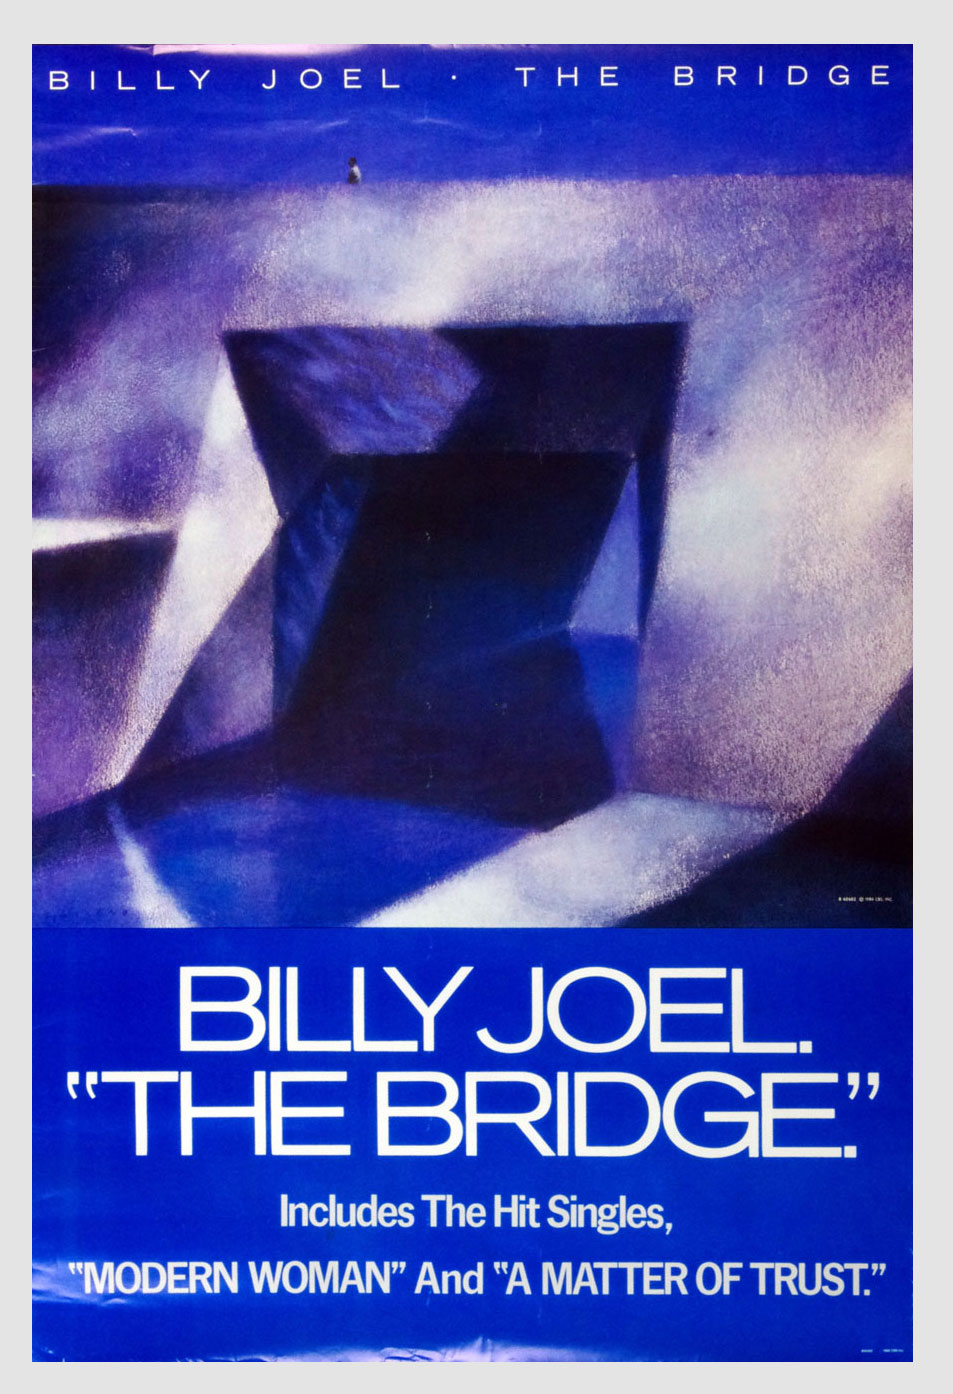 Billy Joel Poster 1986 The Bridge Album Promotion